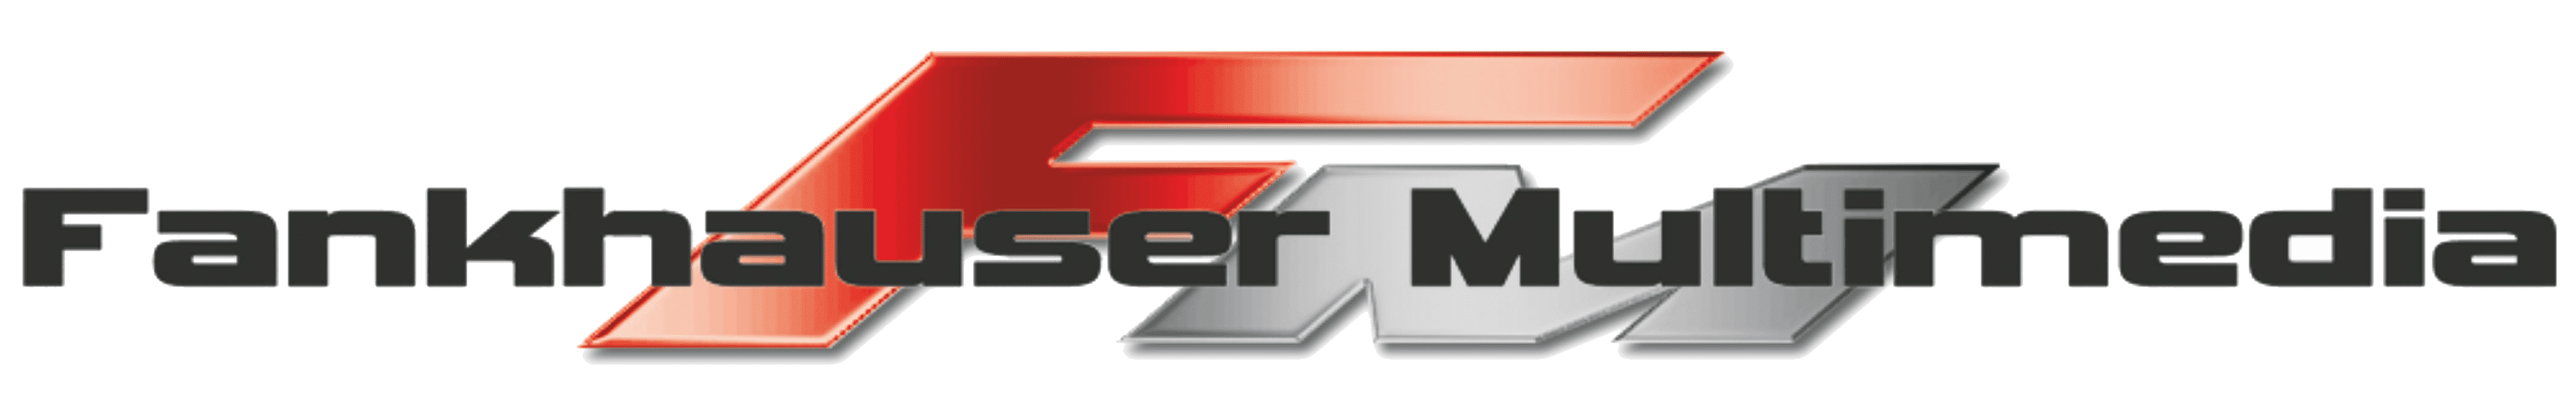 FM-Multimedia-Logo